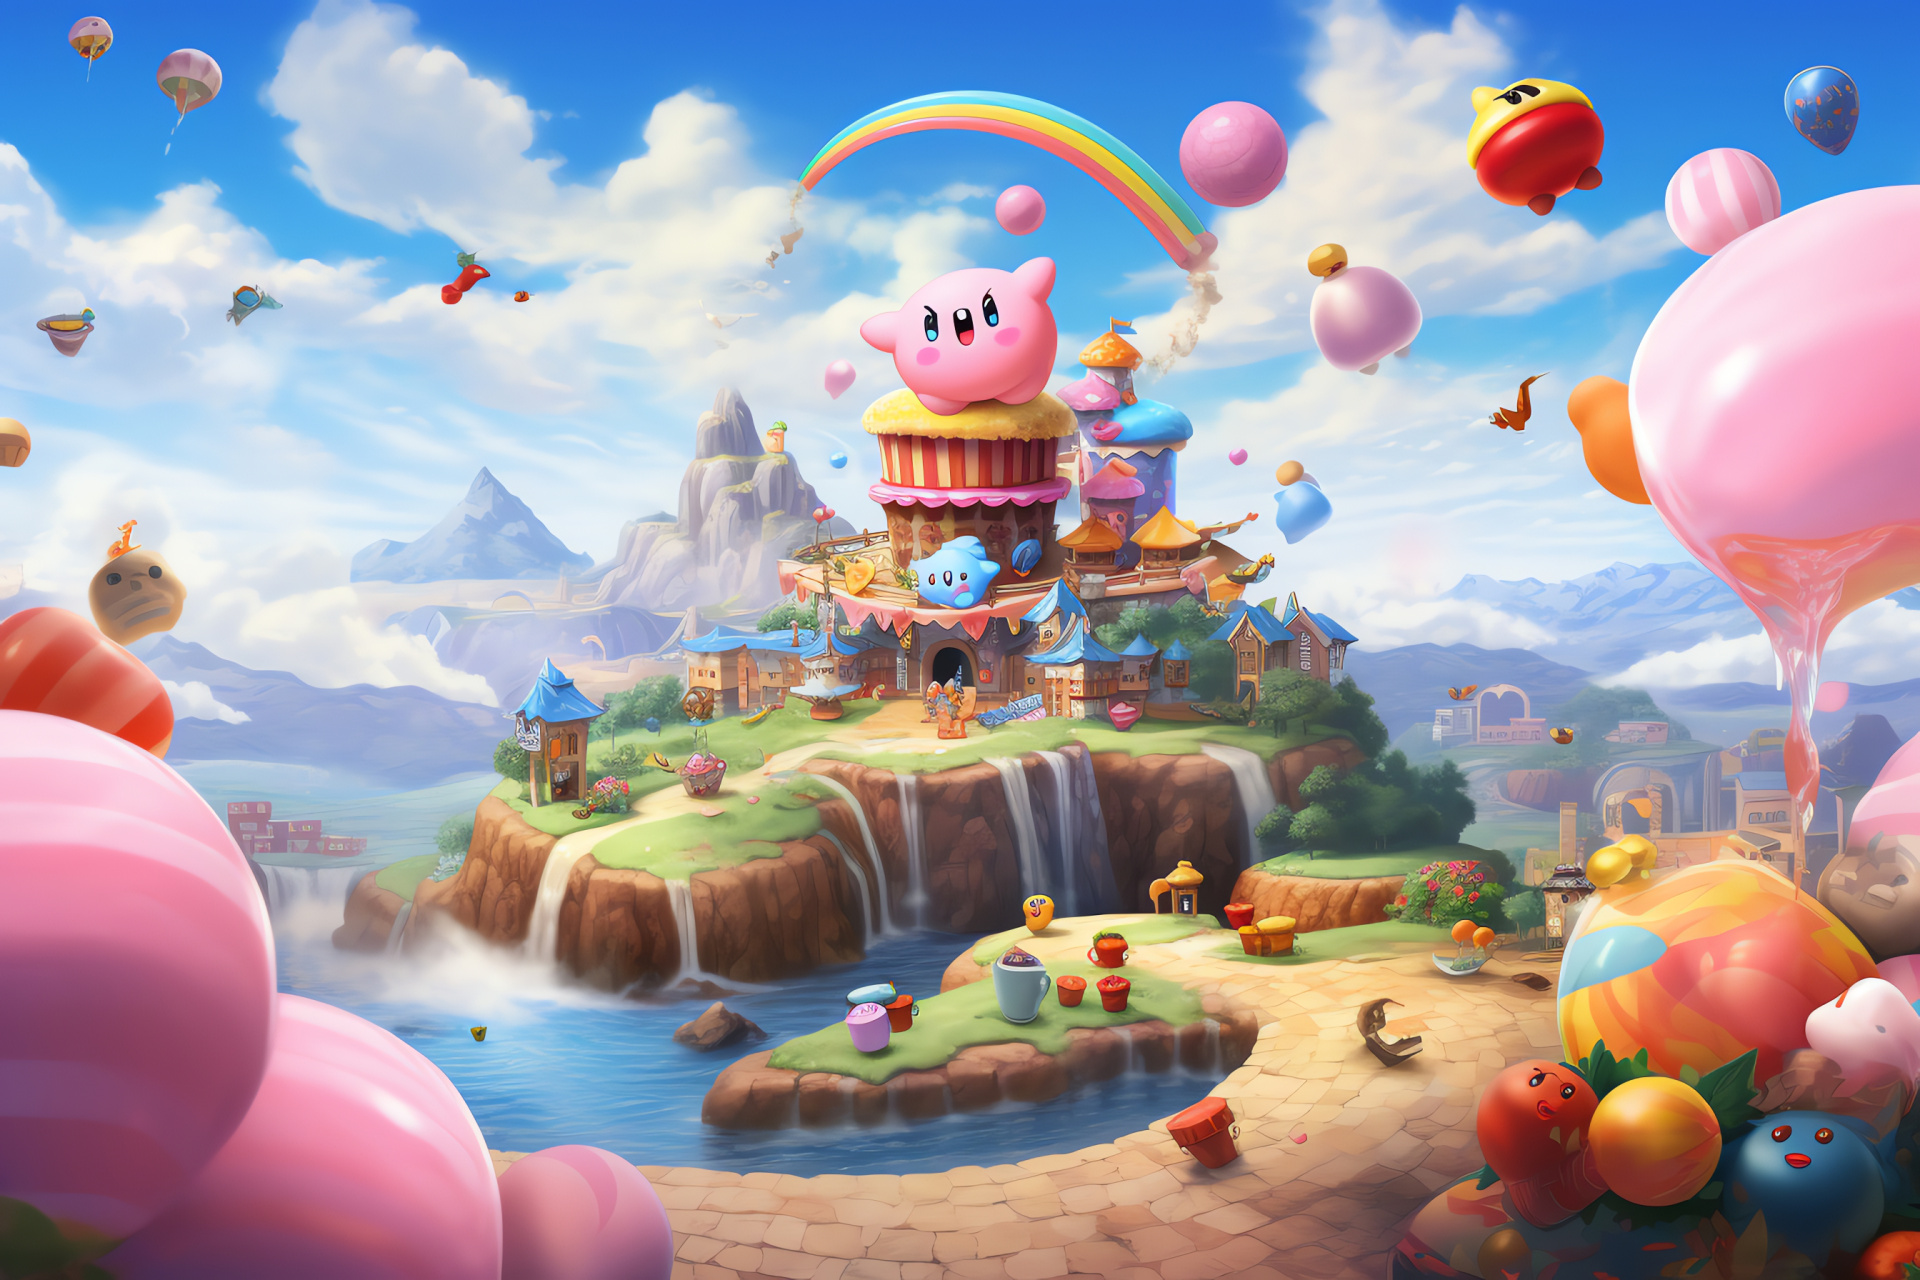 Kirbys birthday, Popstar planet, Heroic puffball, Joyful celebration, Gaming legend, HD Desktop Wallpaper